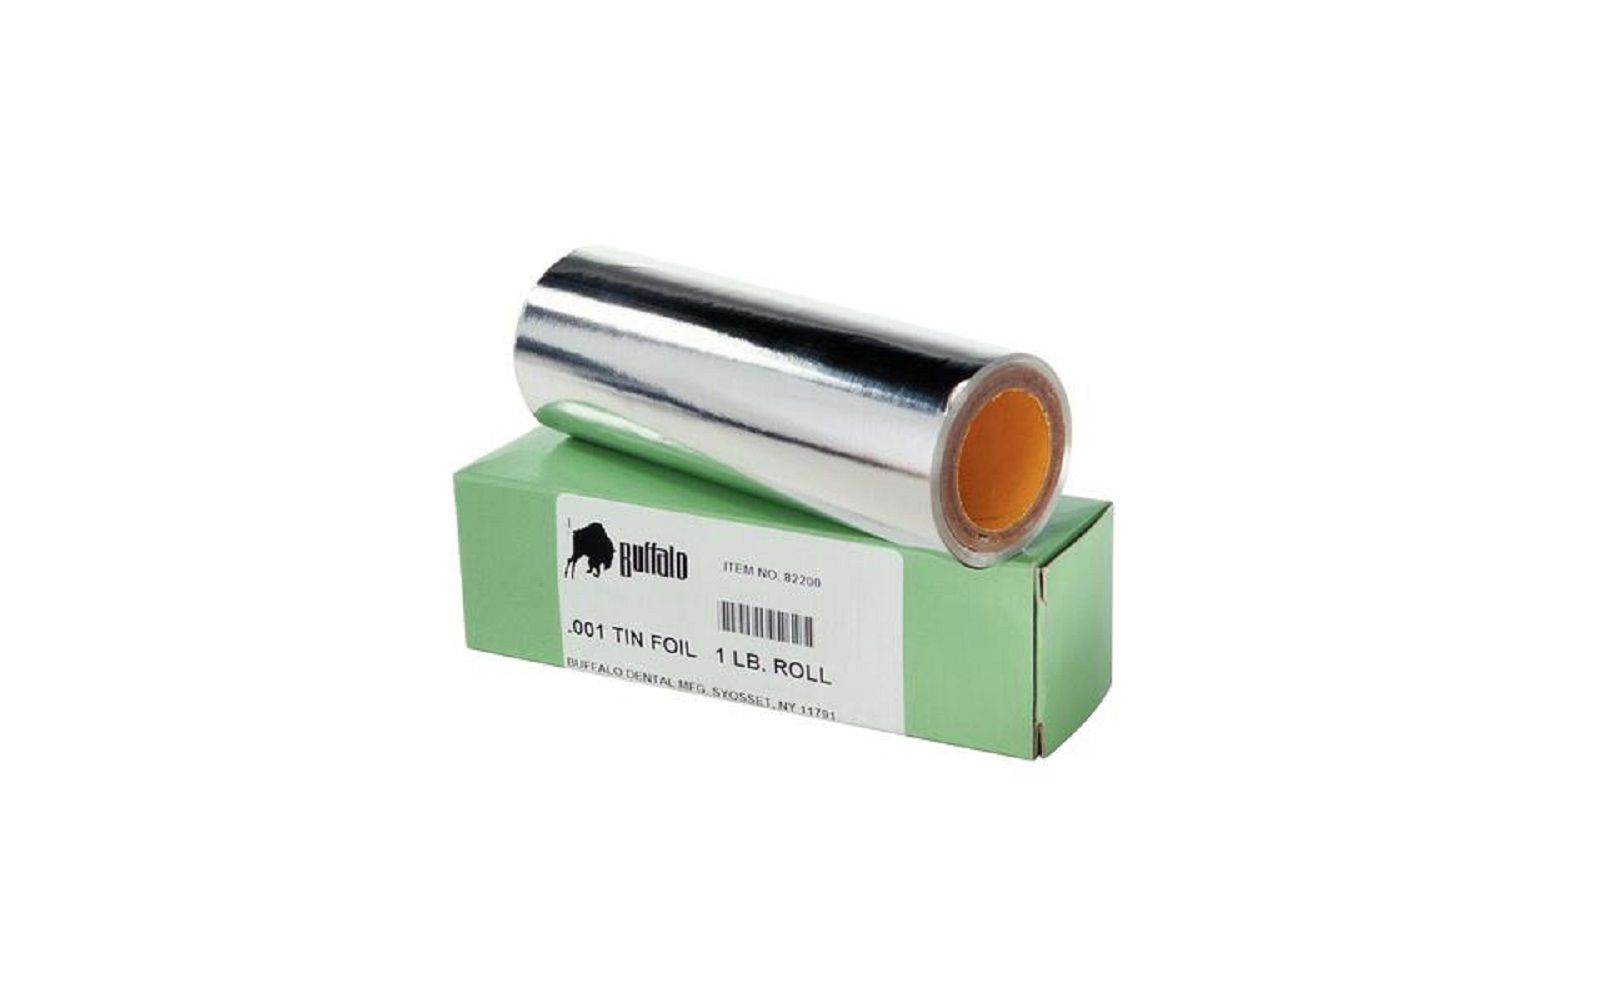 Tin foil – 6" wide, 1 lb roll - buffalo dental manufacturing co inc